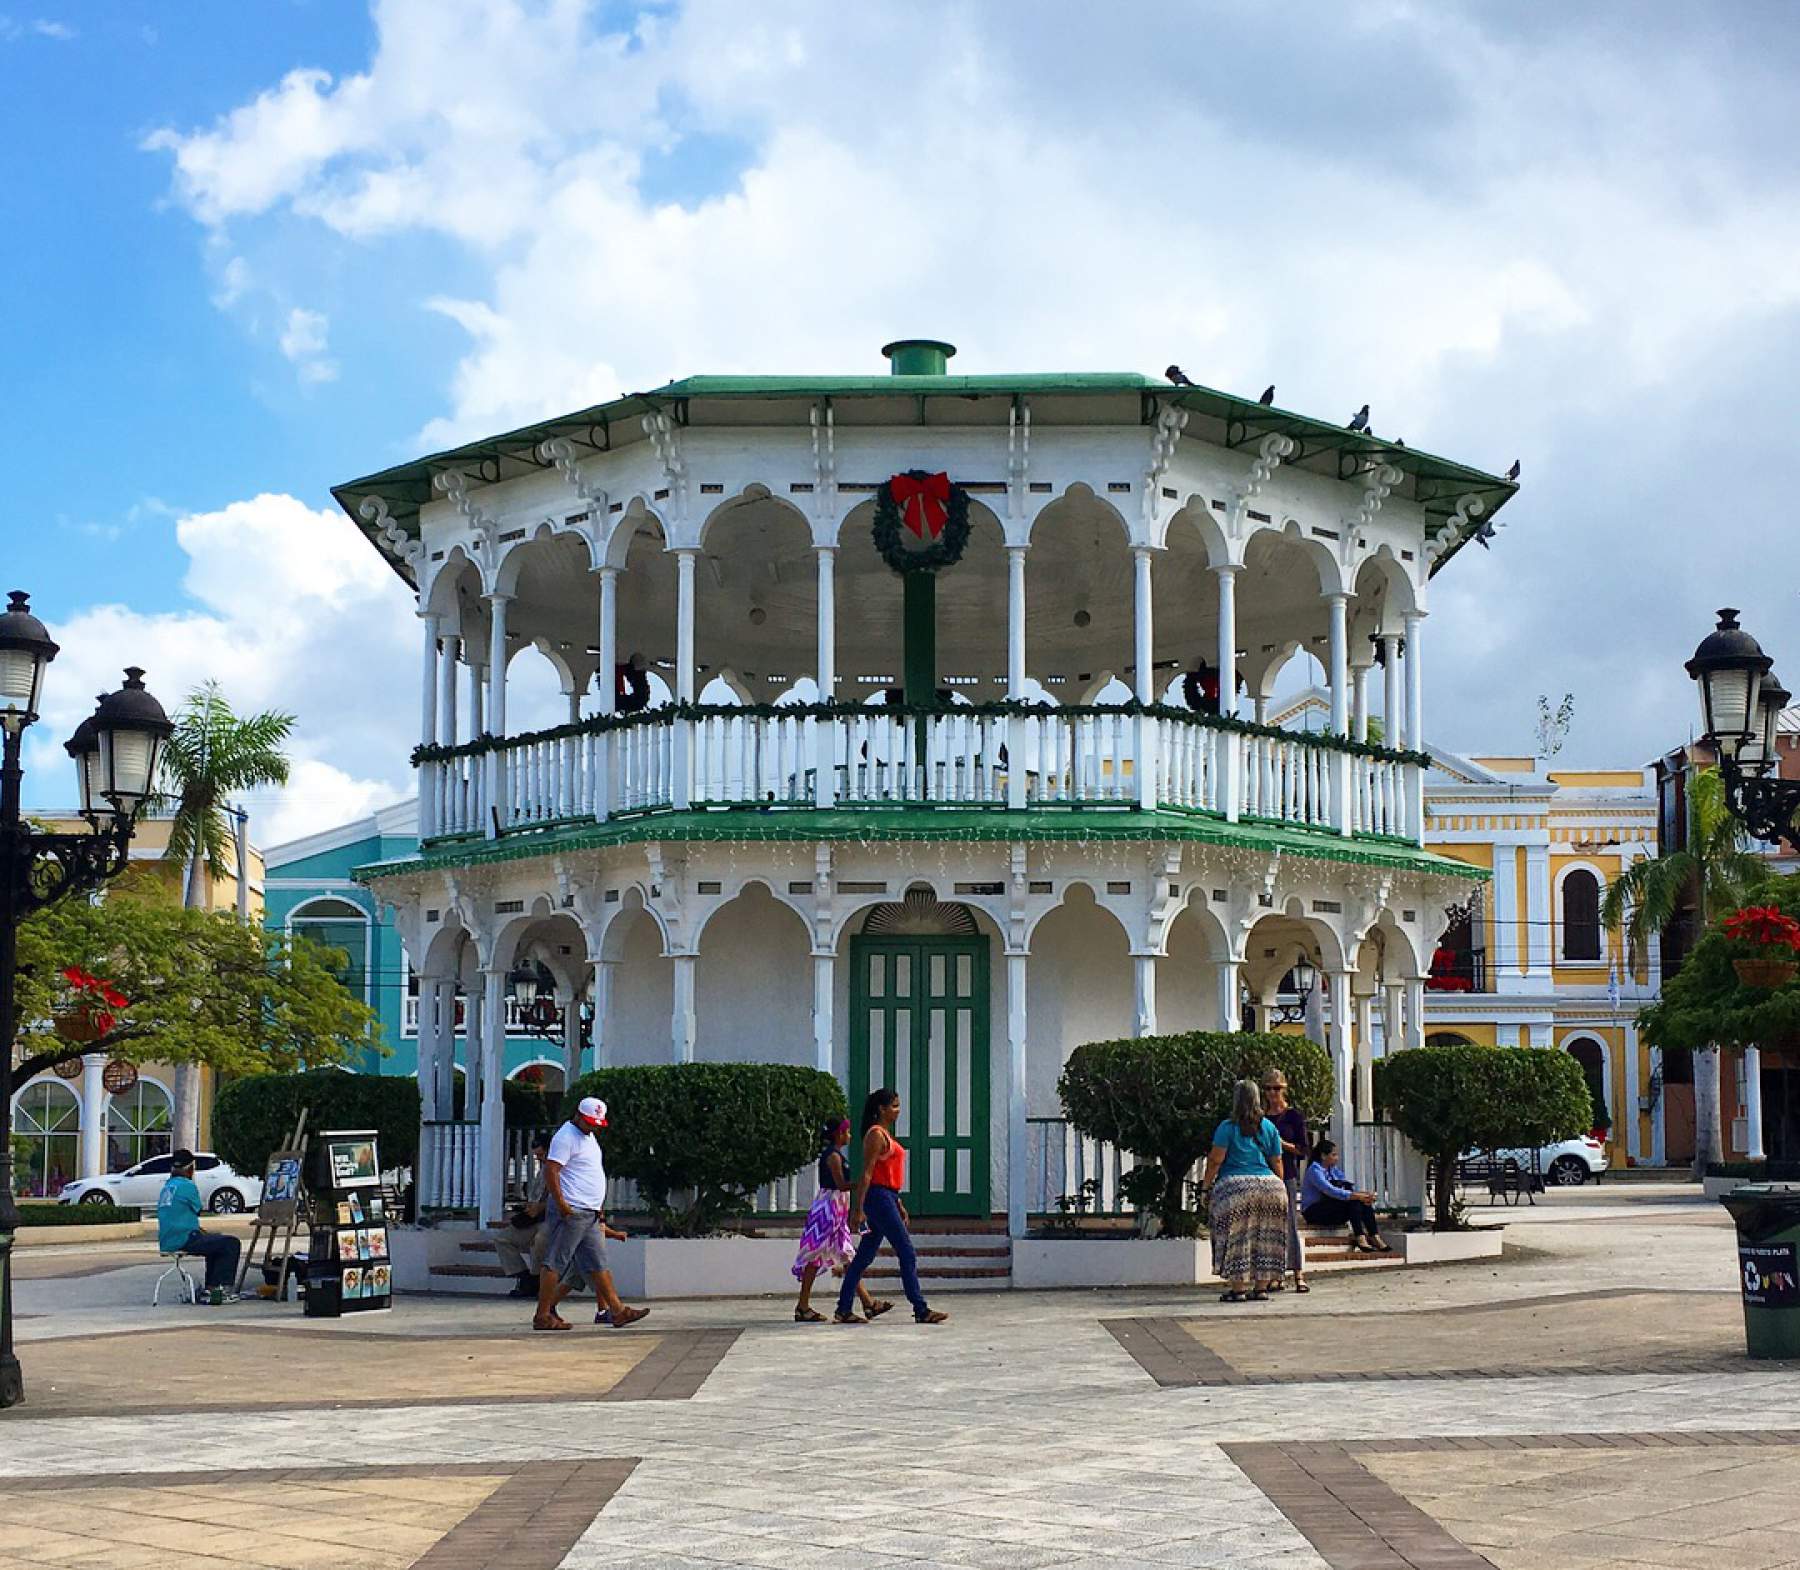 Kiosk in Puerto Plata, Dominican Republic